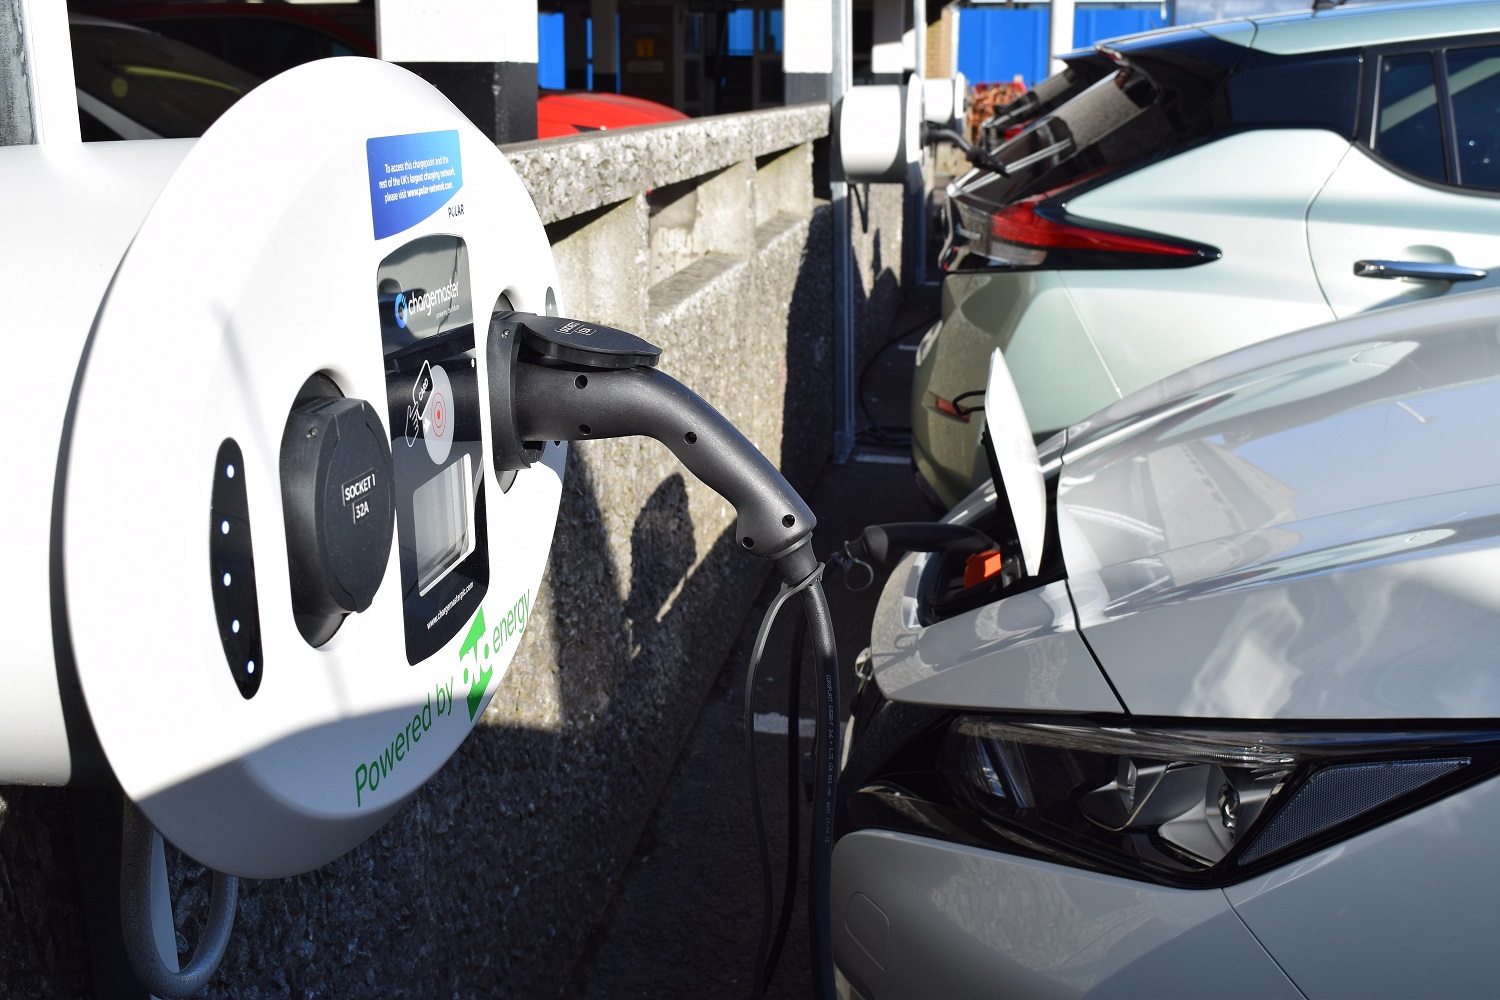 Car electric vehicle charging at public wallbox